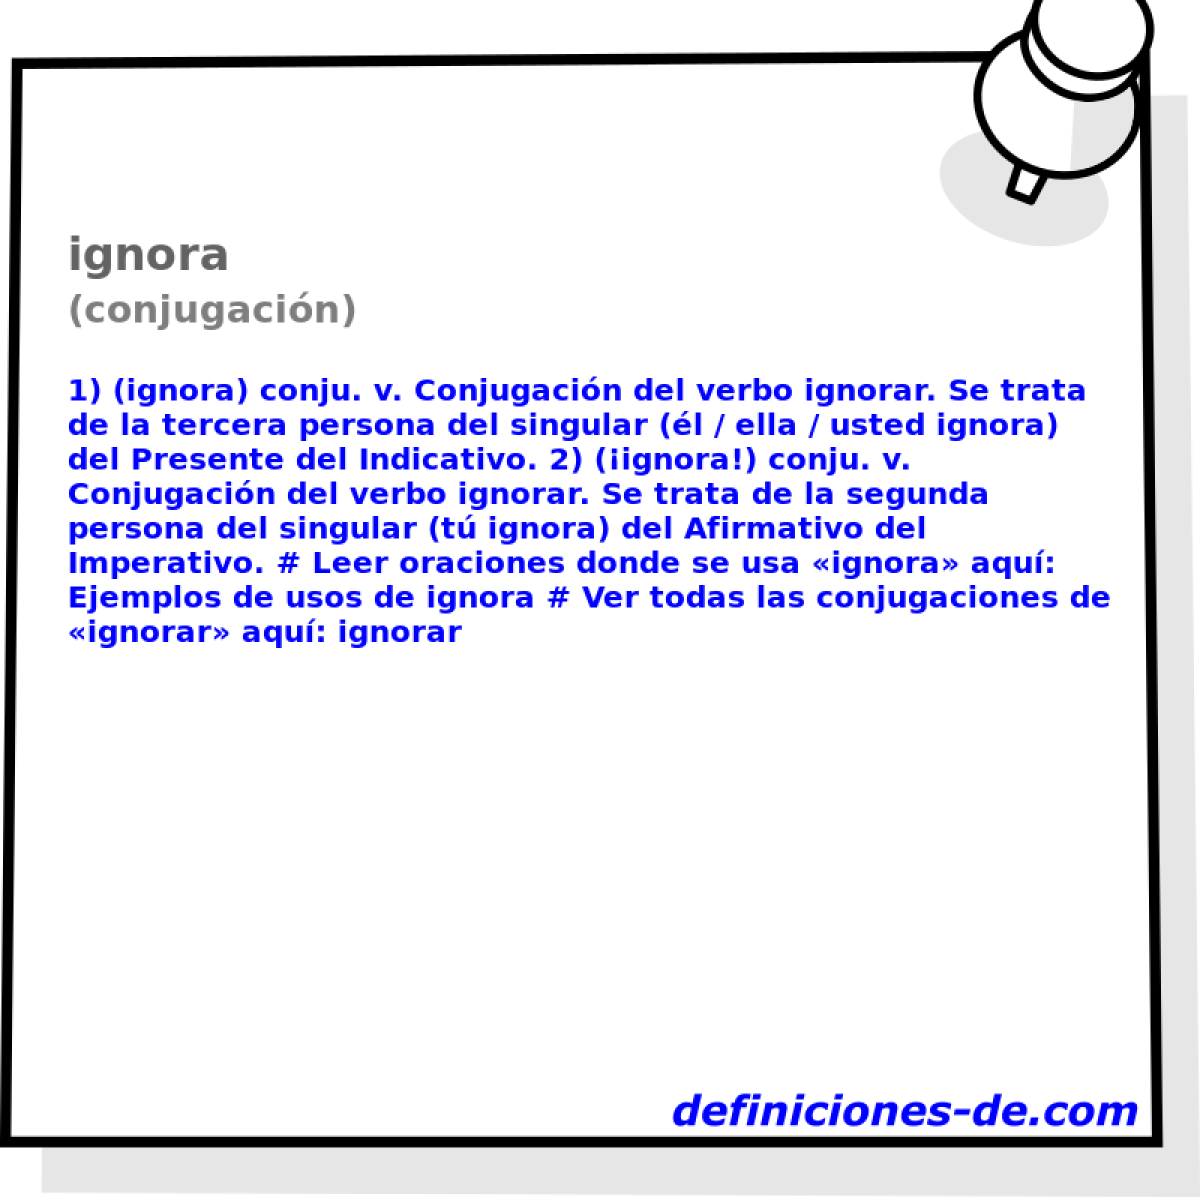 ignora (conjugacin)